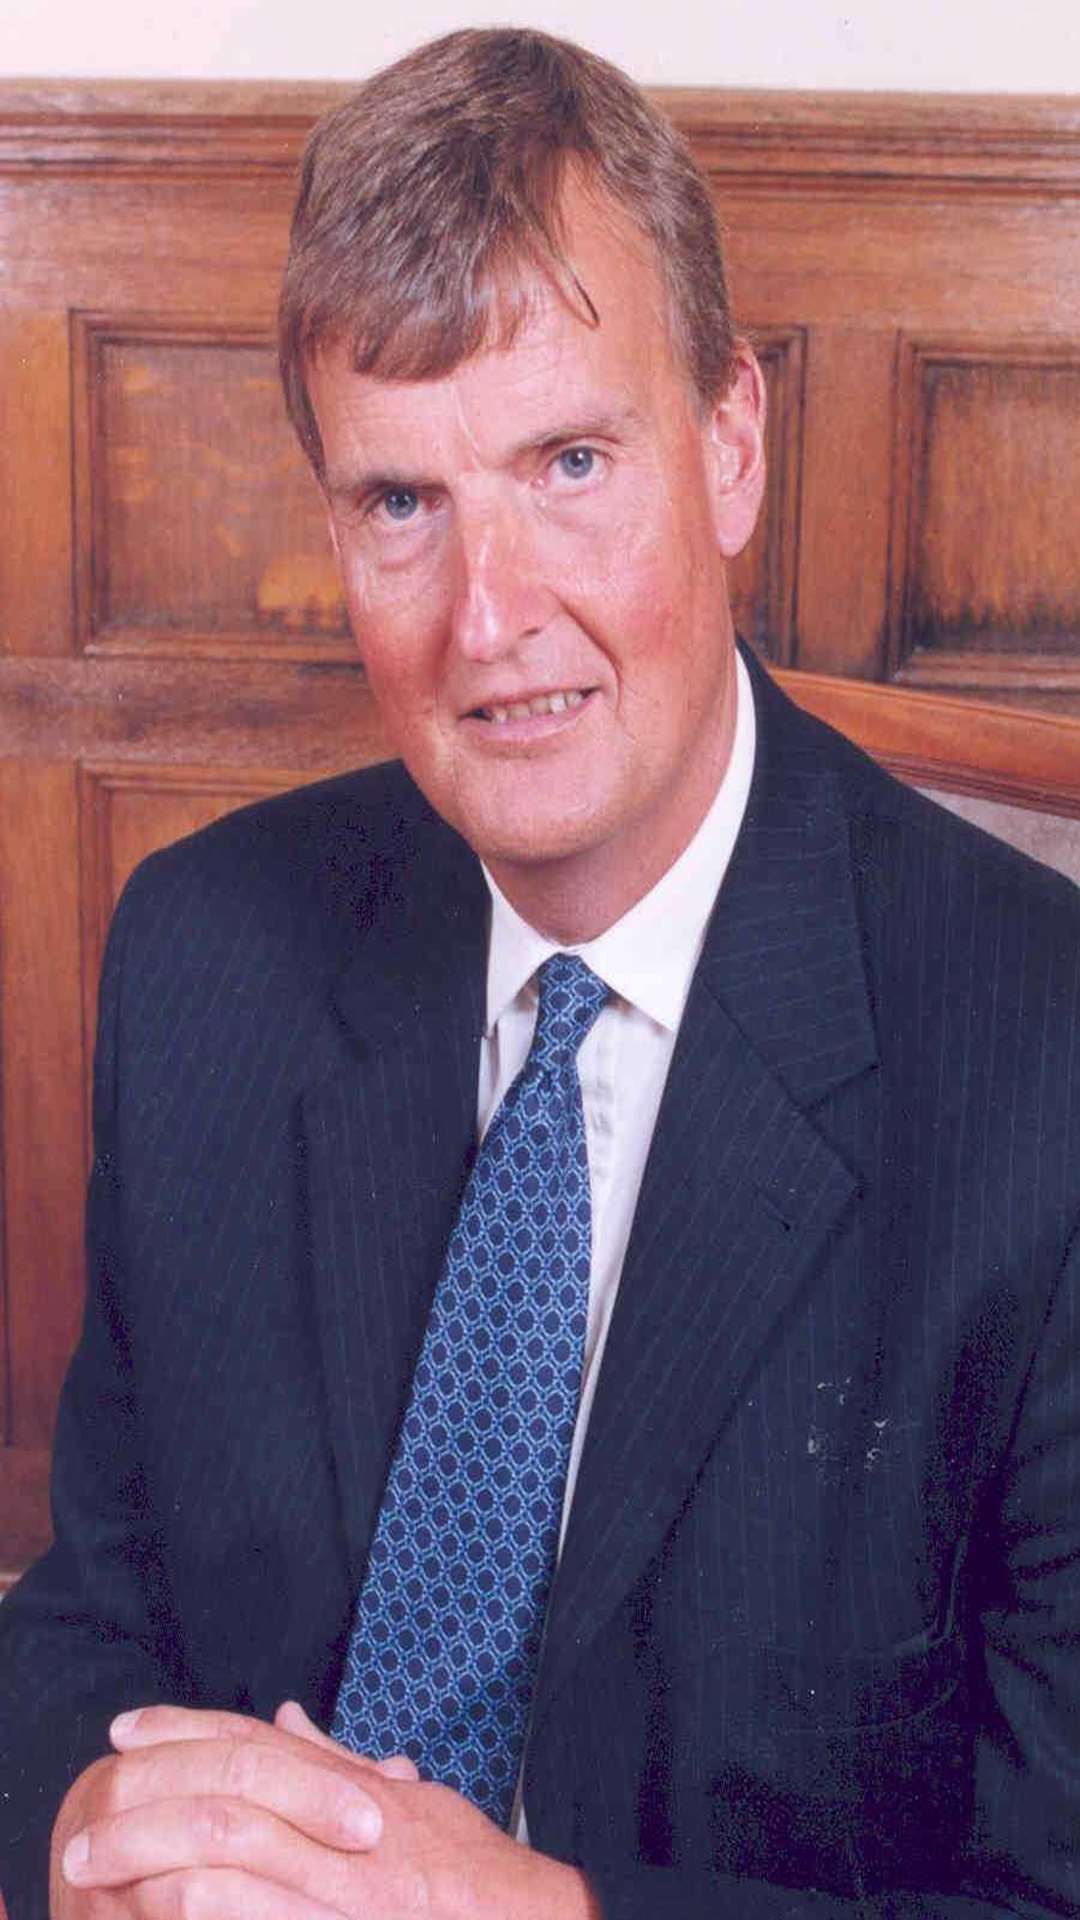 Kent County Council leader Cllr Paul Carter